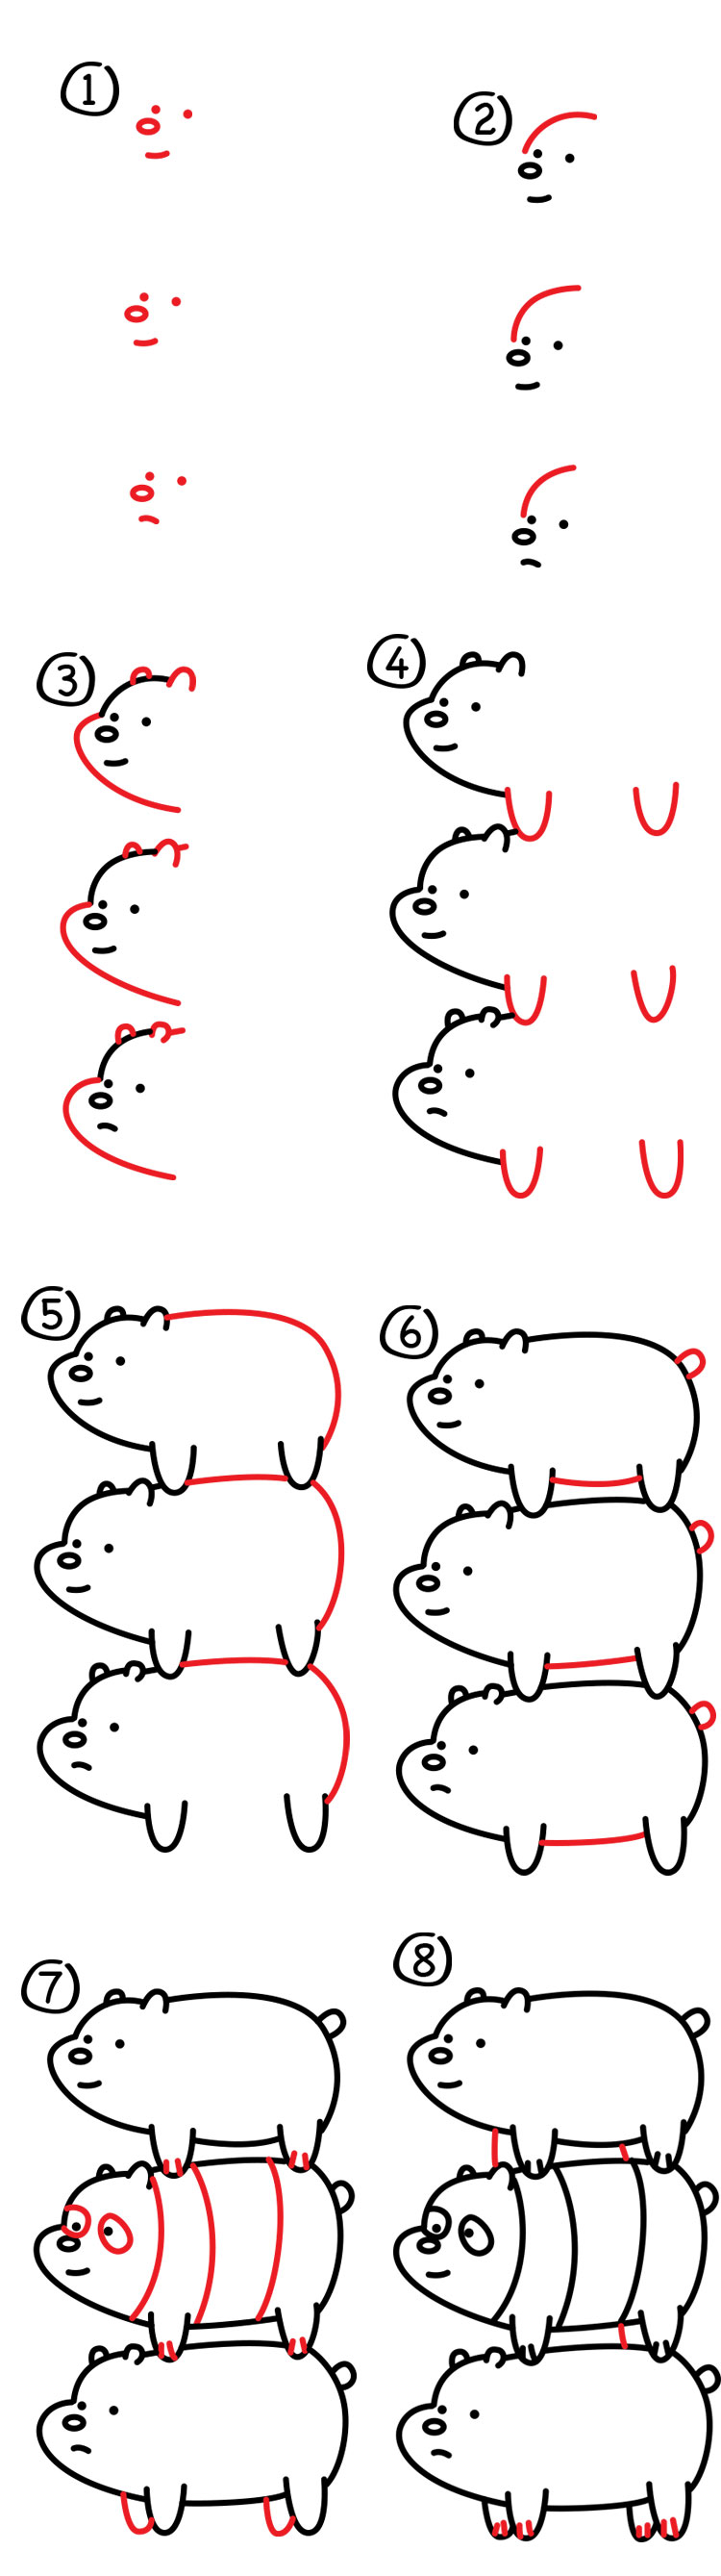 How To Draw We Bare Bears Bearstack Art For Kids Hub